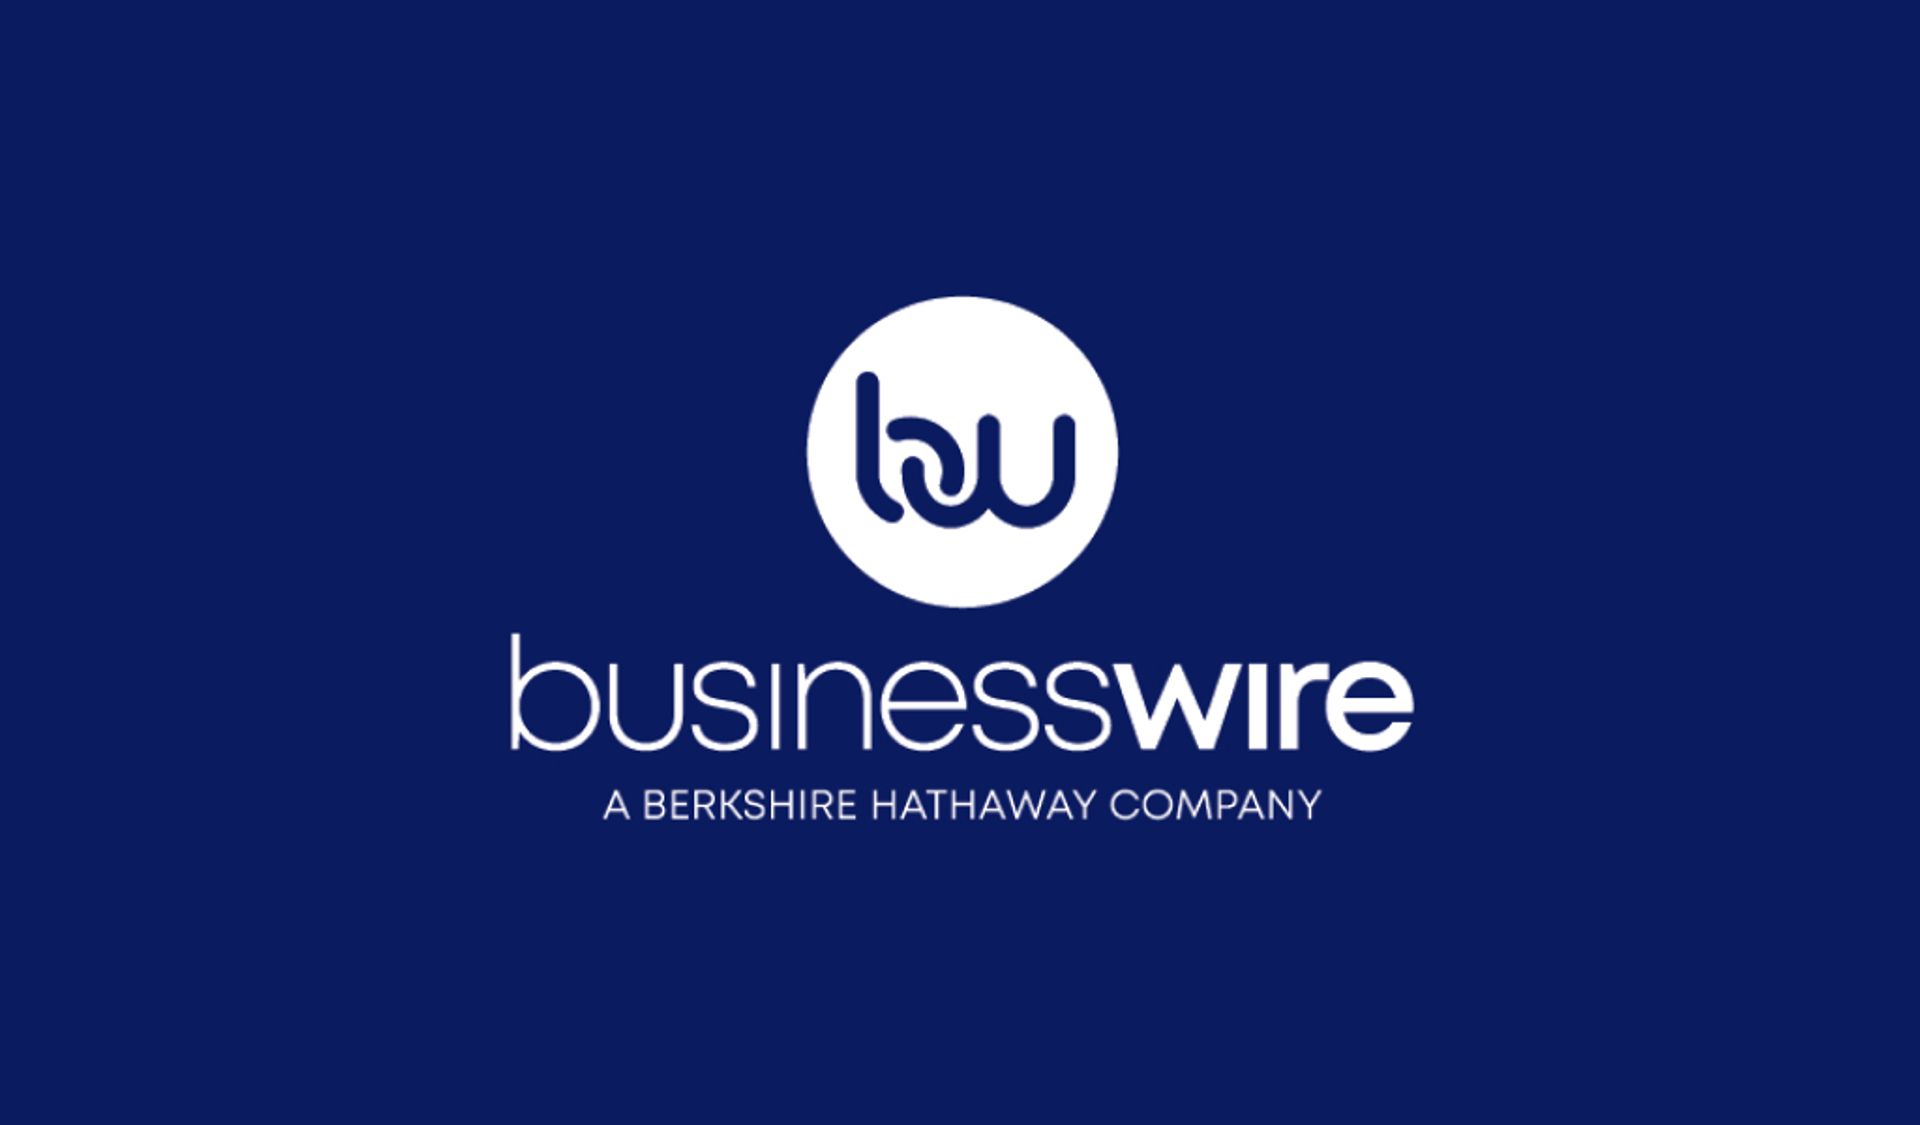 Business wire press release logo